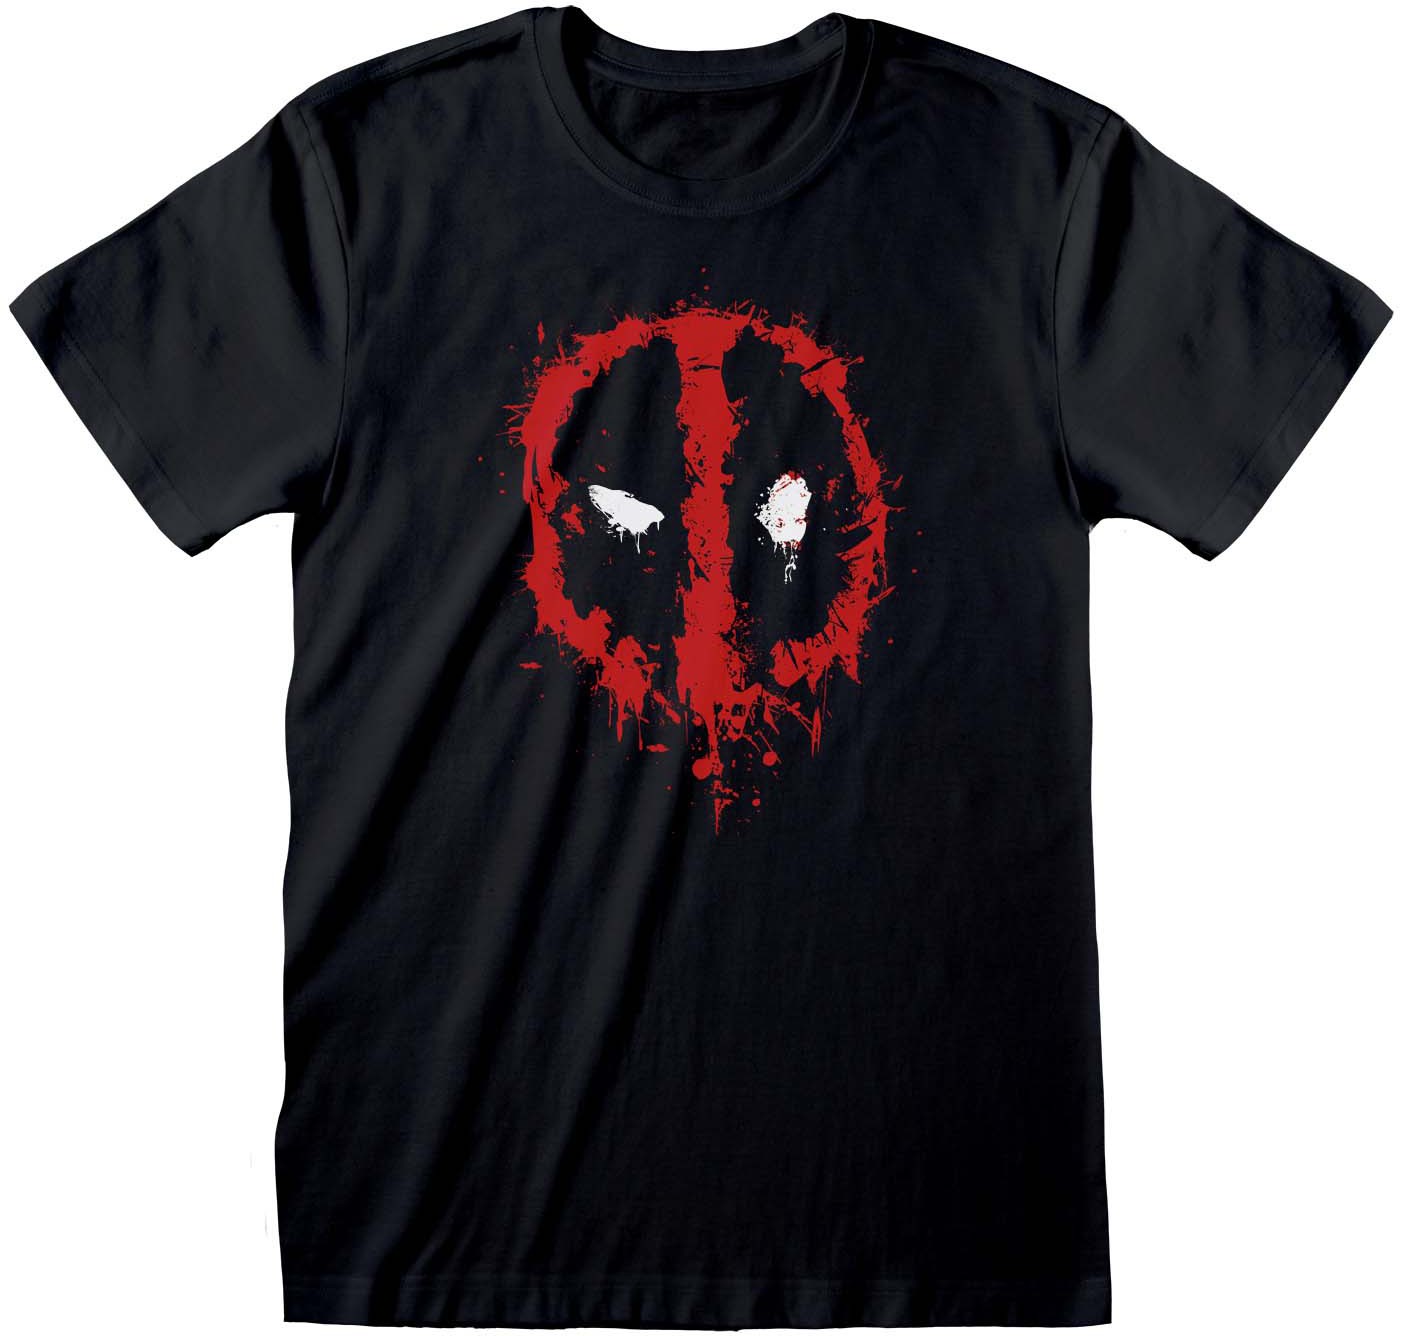 Marvel Comics - Deadpool Splat T-Shirt